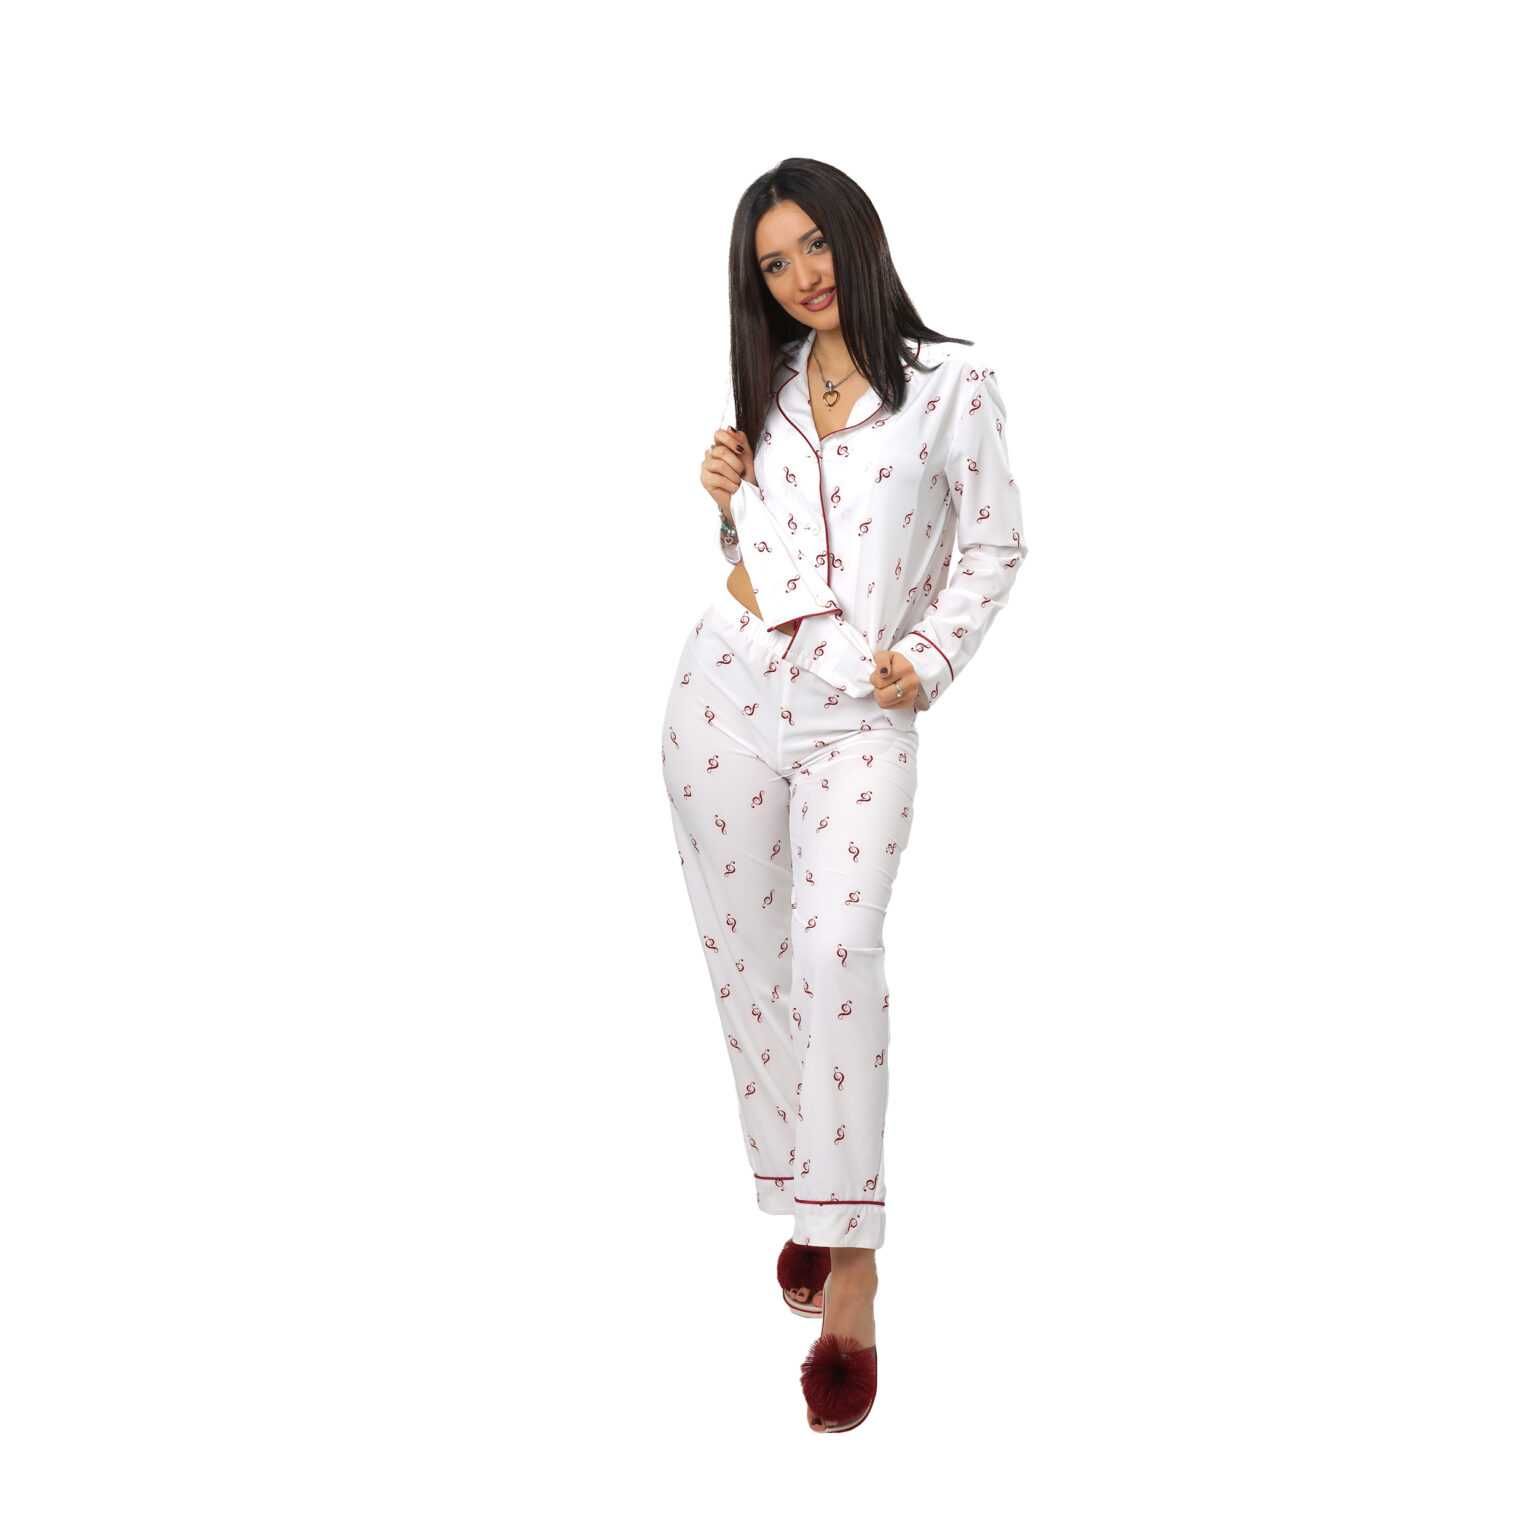 Cadoul Perfect - Pijama Motive Muzicale din Vascoza